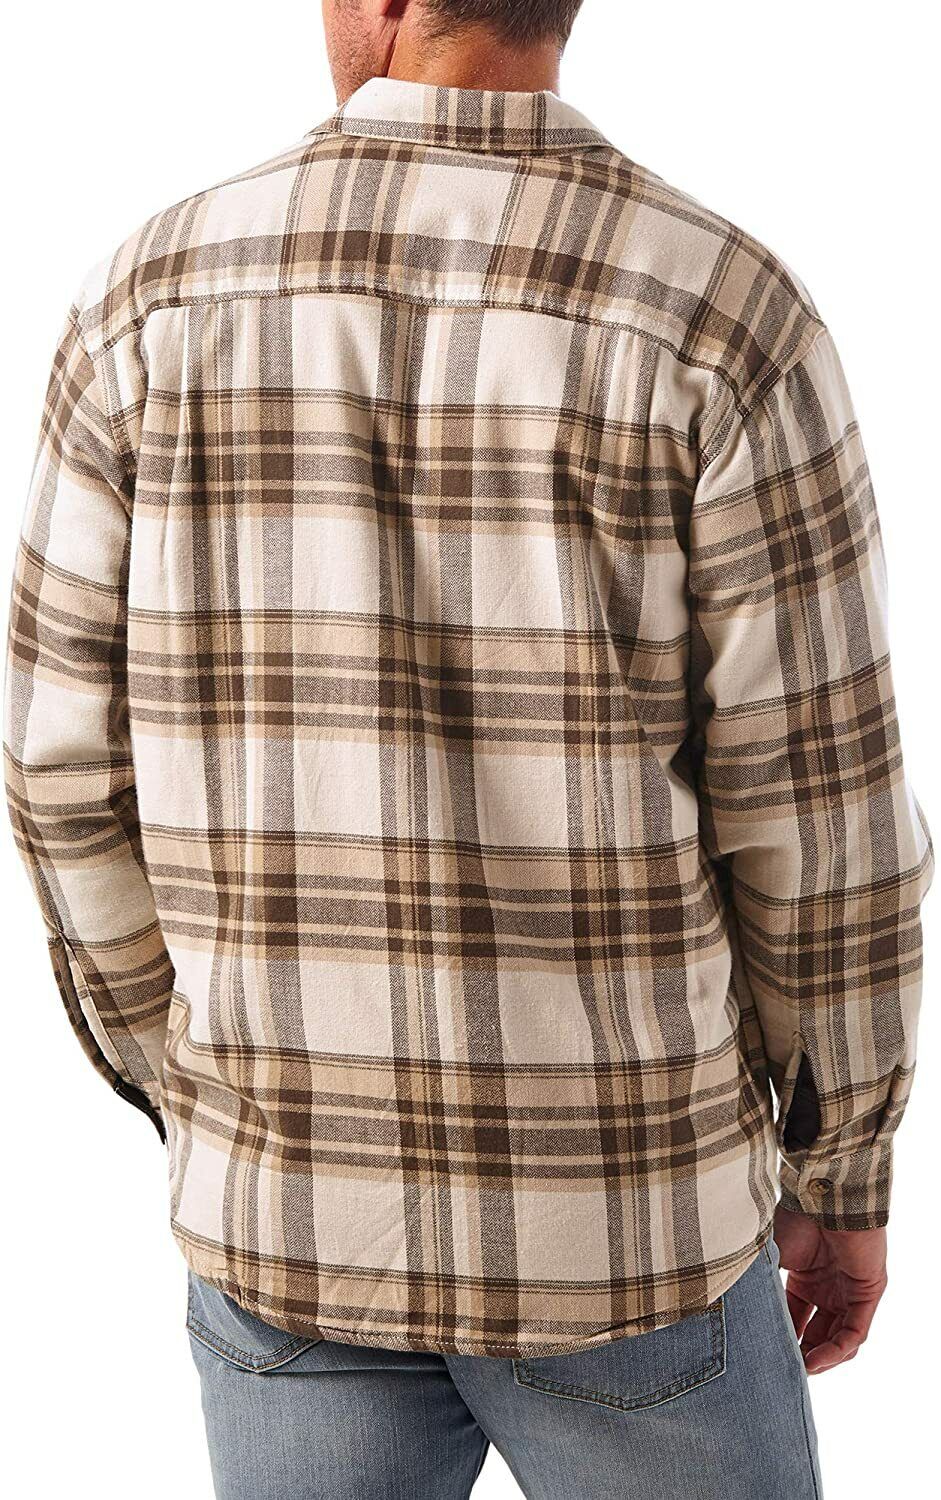 Wrangler Authentics Men's Long Sleeve Sherpa Lined Flannel Shirt Jacket |  eBay